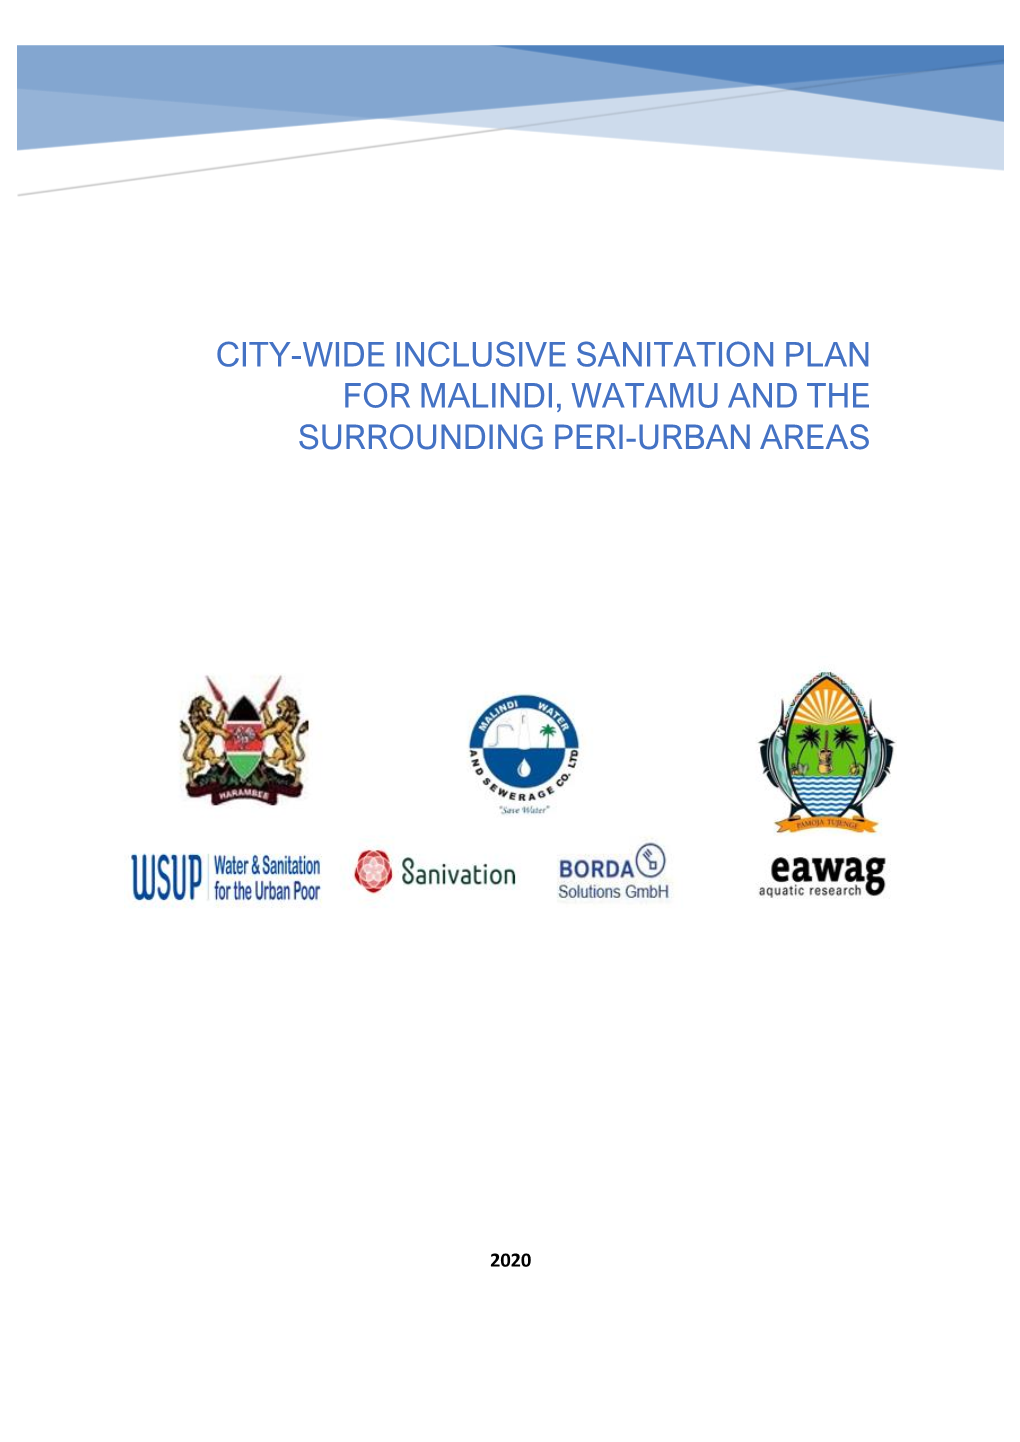 City-Wide Inclusive Sanitation Plan for Malindi, Watamu and the Surrounding Peri-Urban Areas